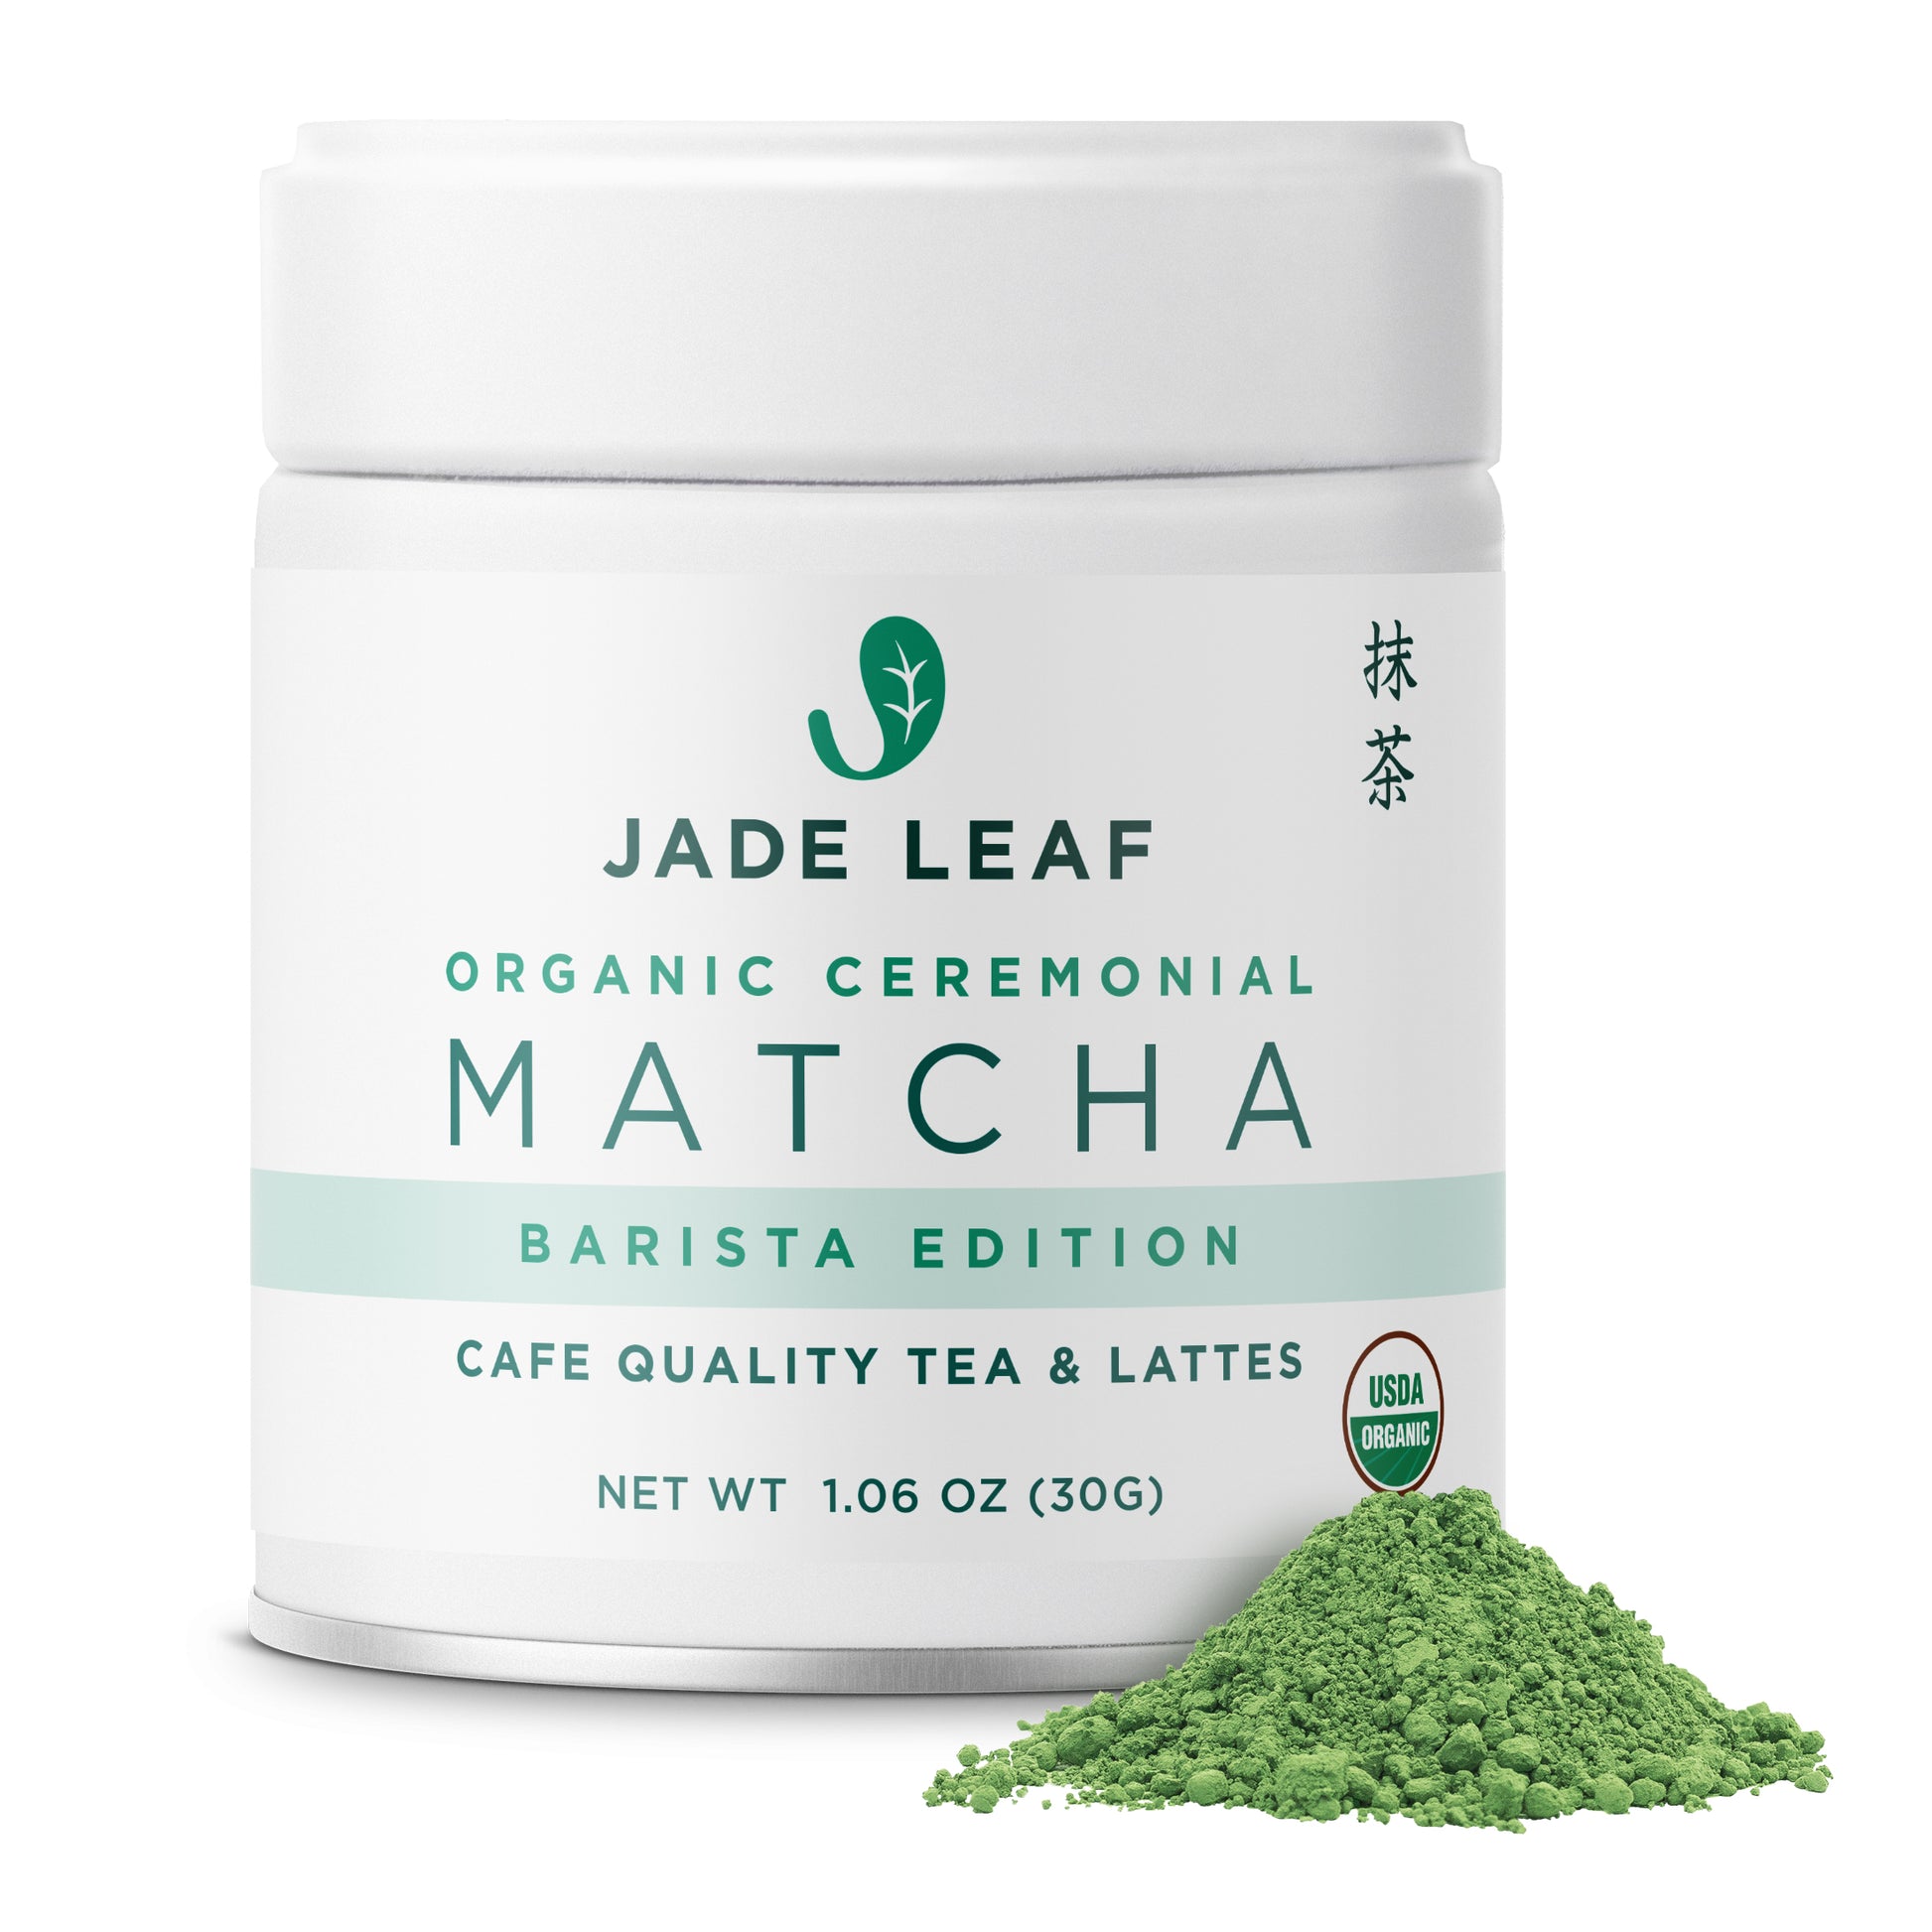 Jade Leaf Barista Edition Cafe Grade Matcha Green Tea Powder - Organic, Authentic Japanese Origin [1oz Tin]